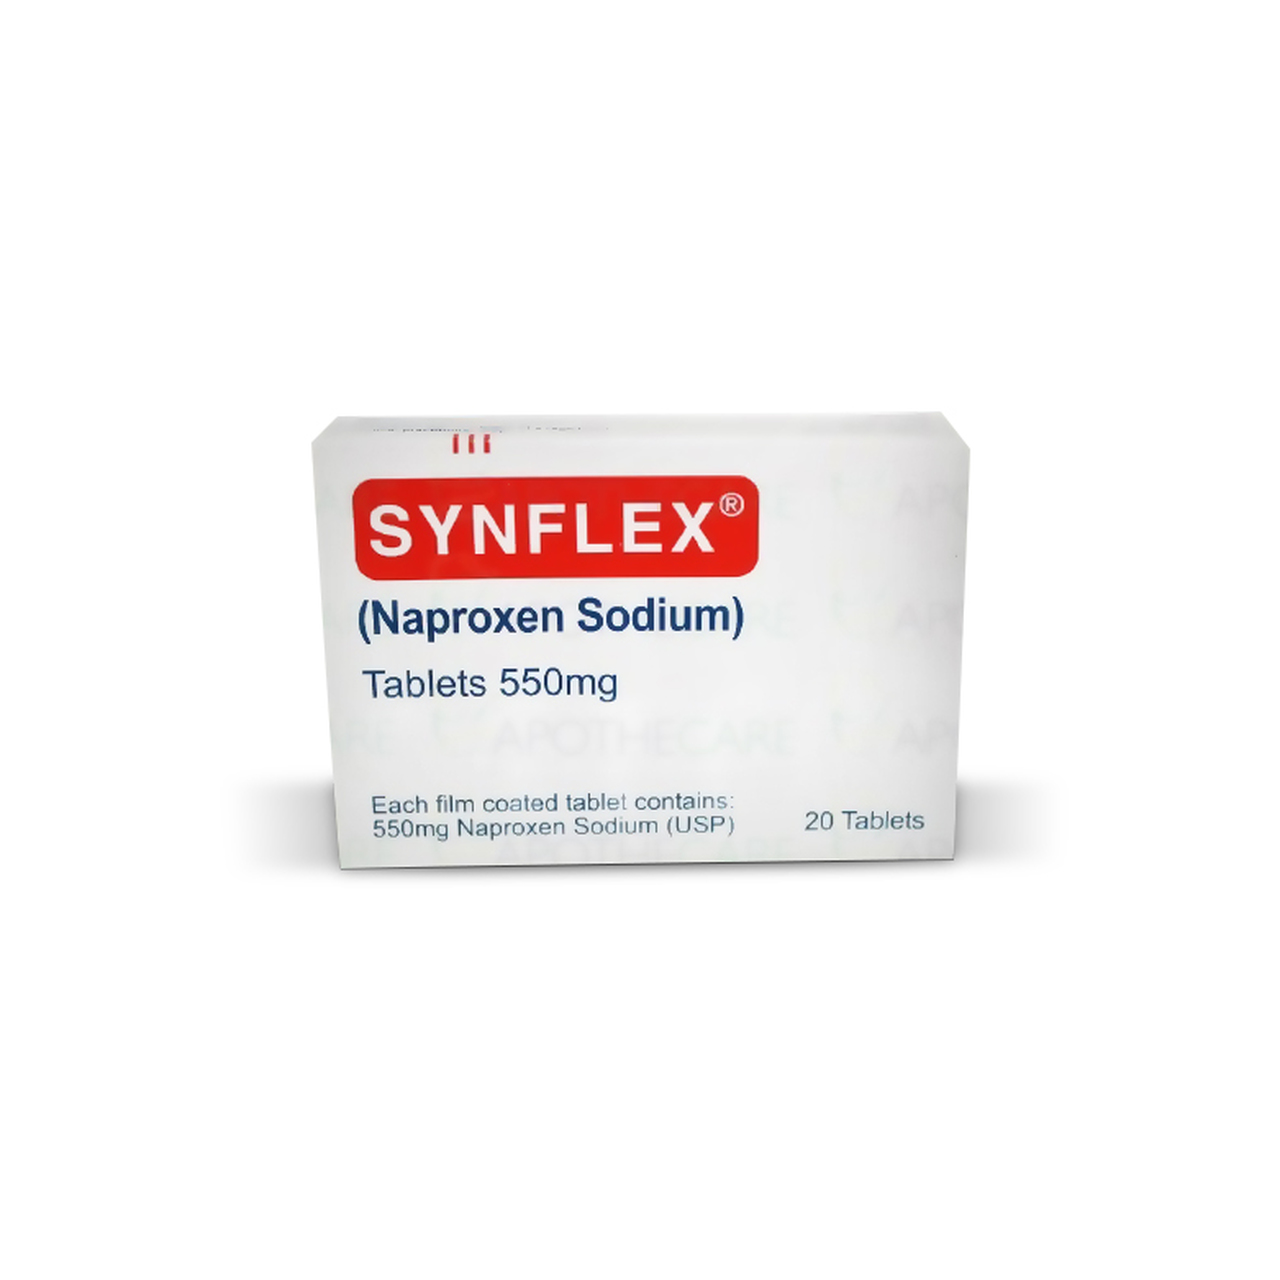 Synflex (Naproxen Sodium) - image 0